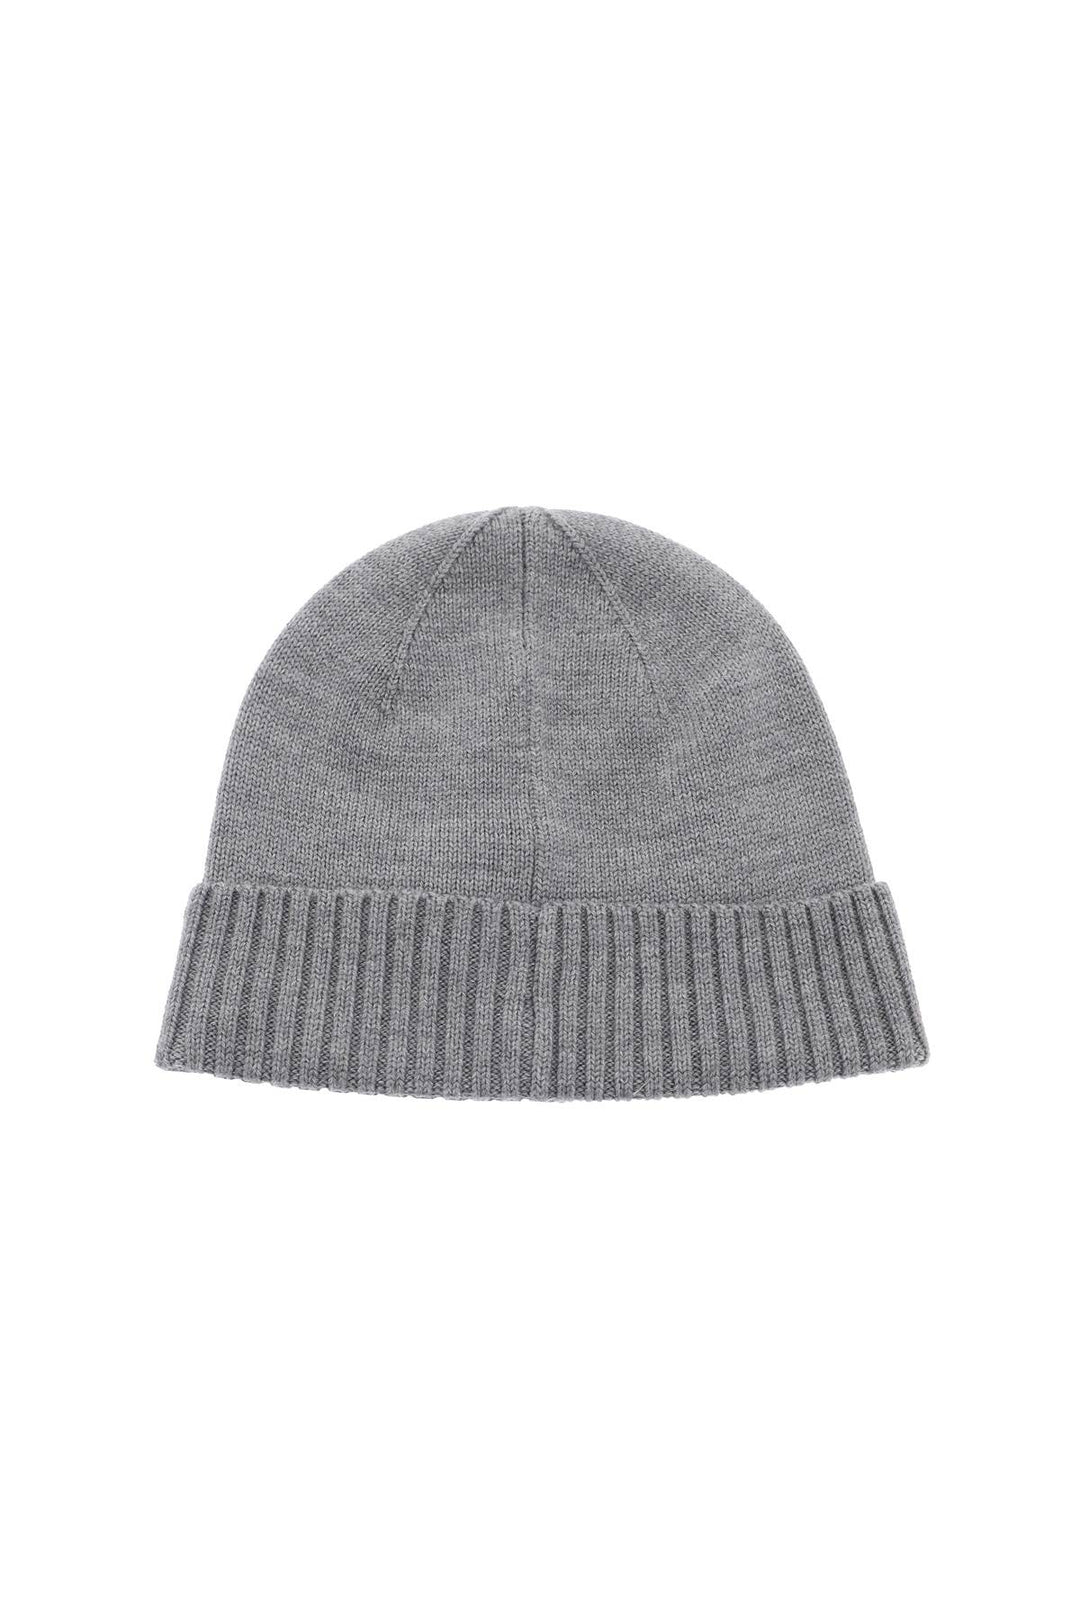 Polo Ralph Lauren Woolen Beanie Hat   Grey